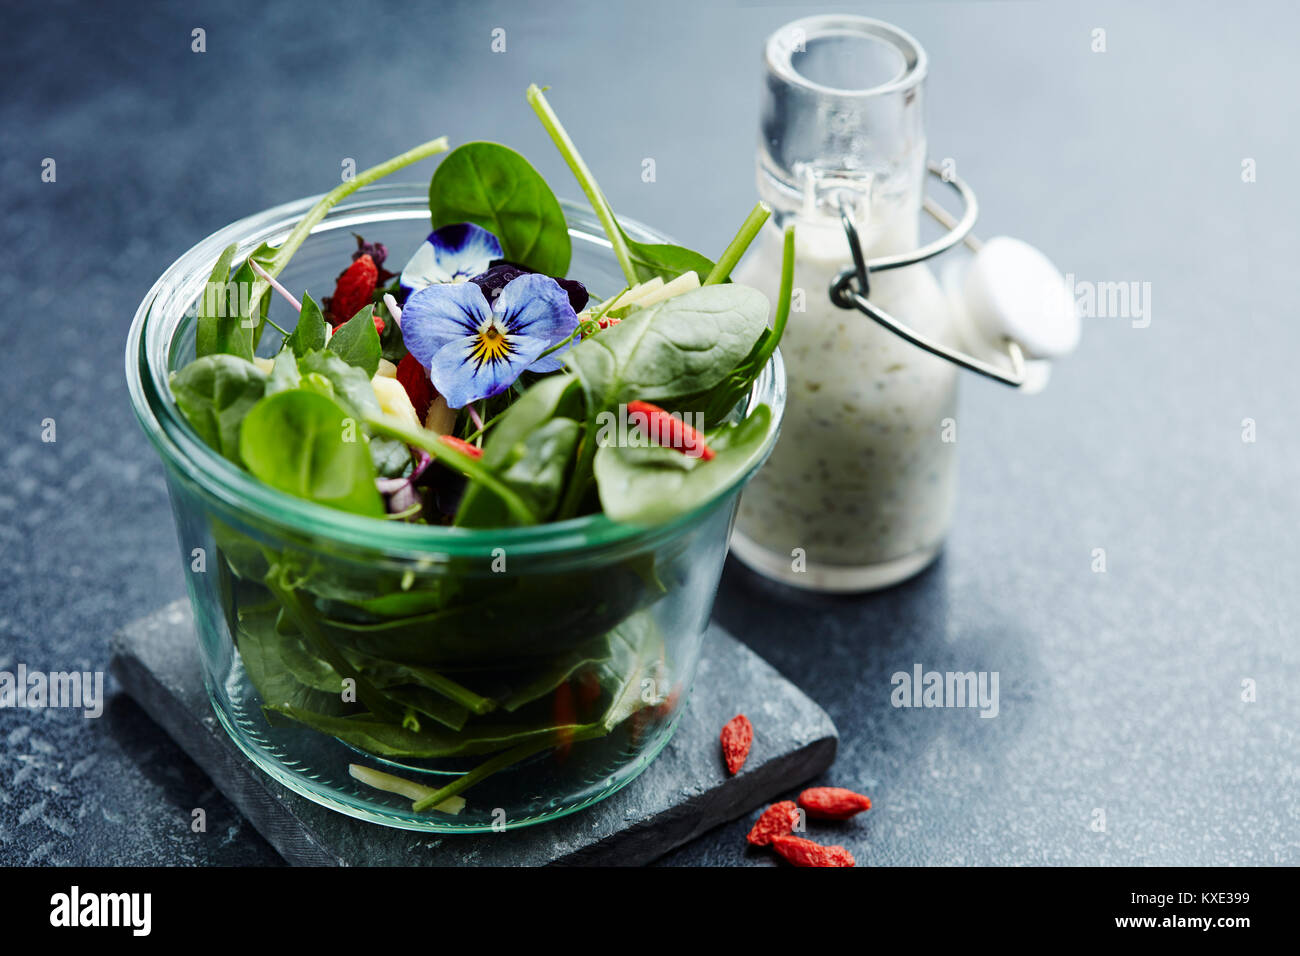 Grüner Salat Stockfoto